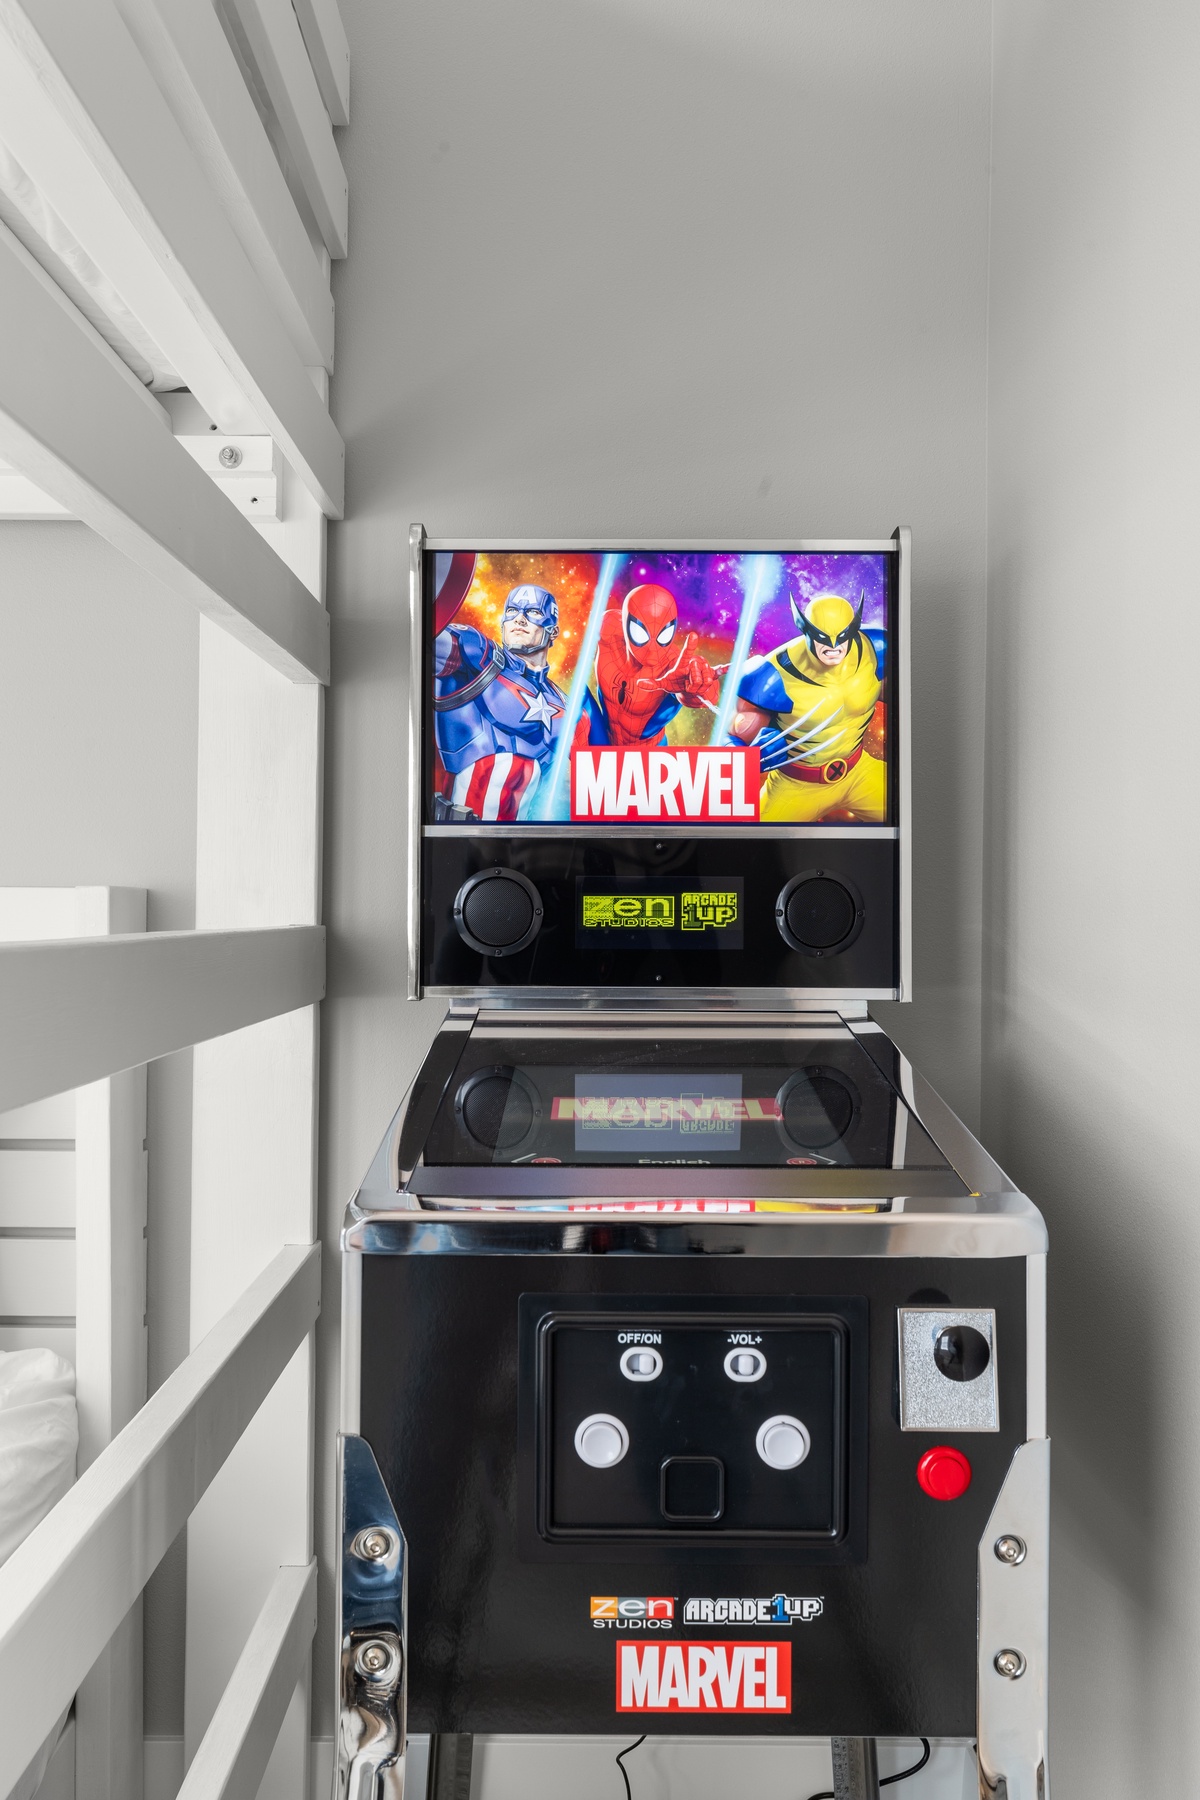 Arcade machine in the bunk room